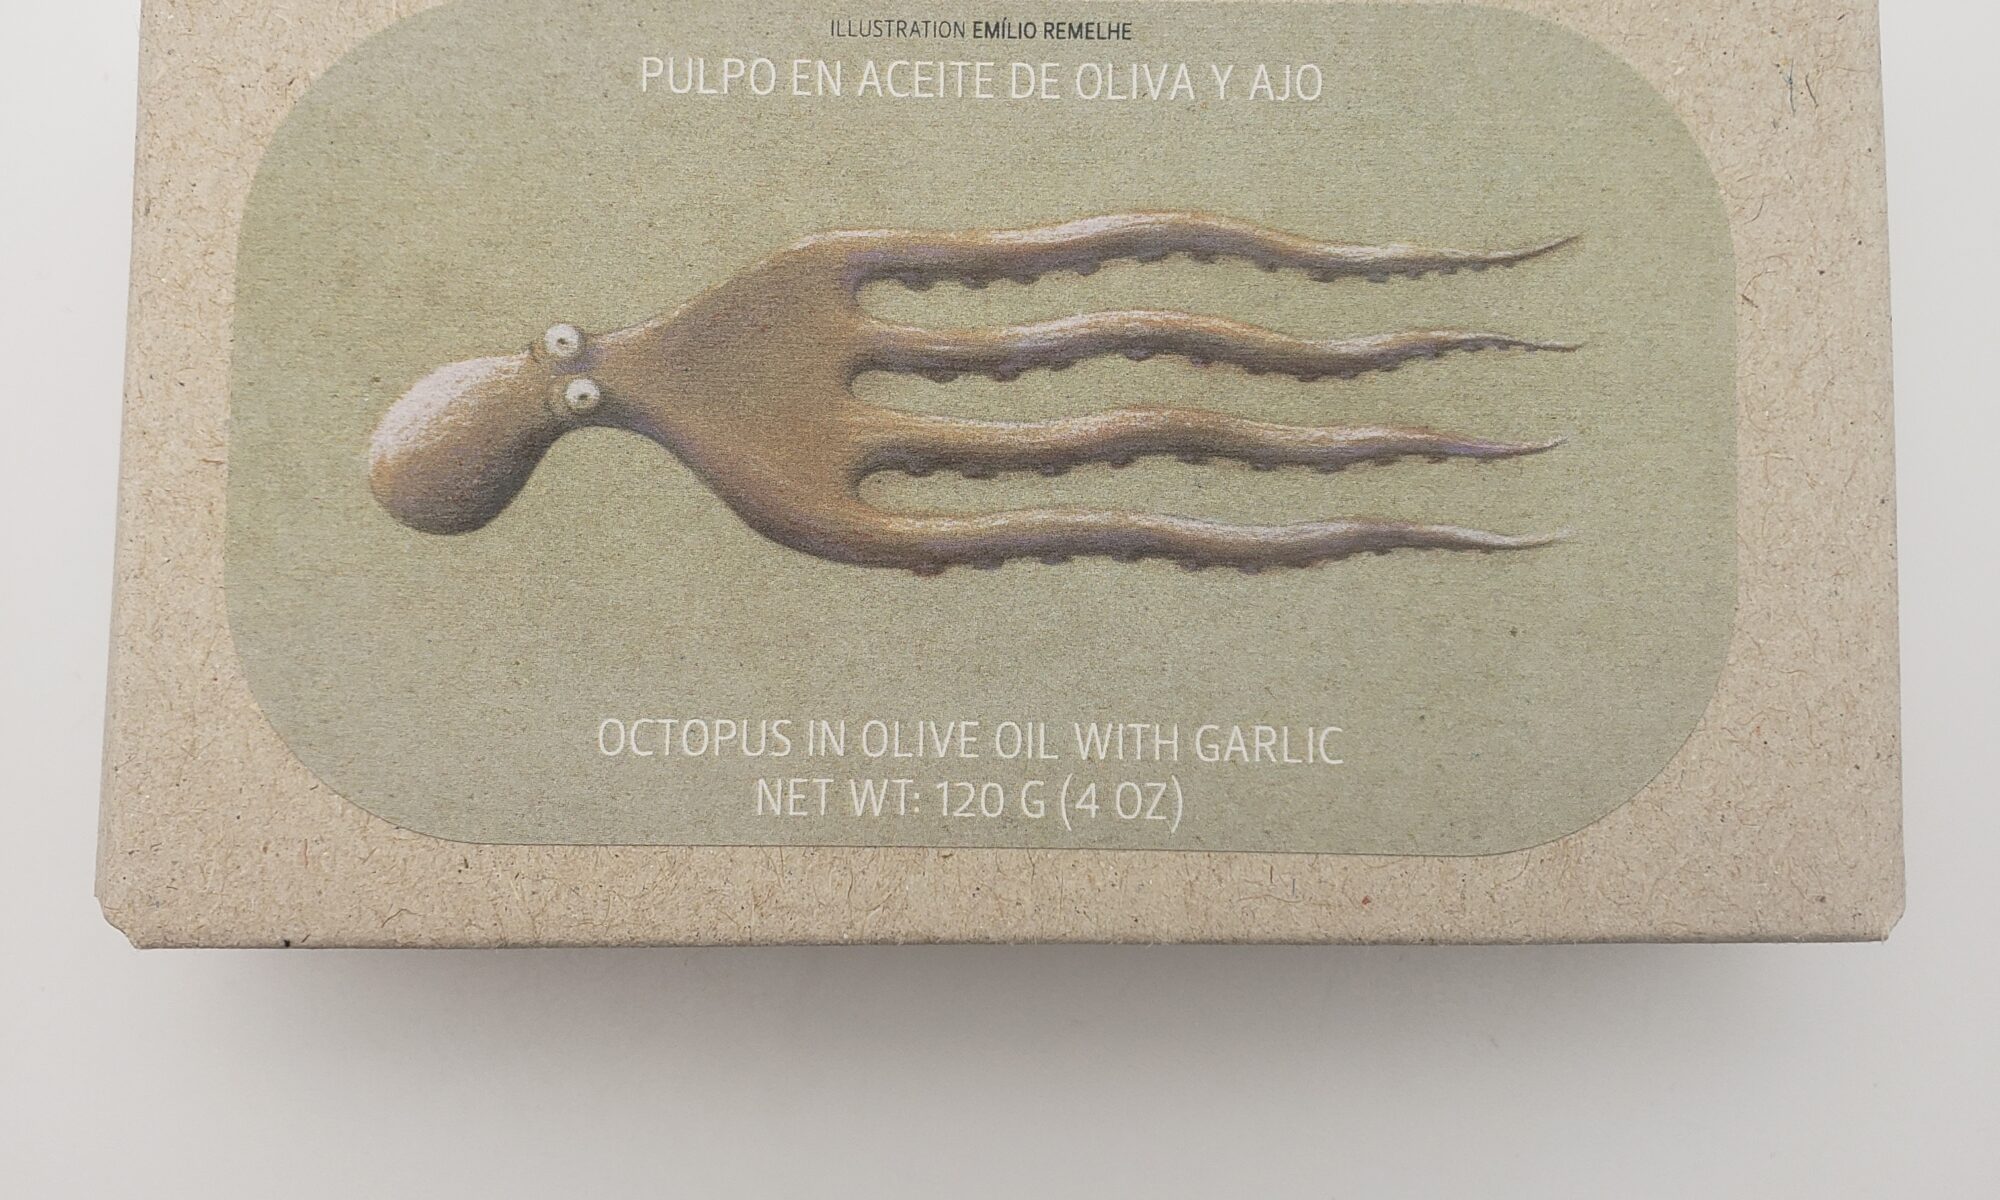 Image of Jose Gourmet octopus with garlic